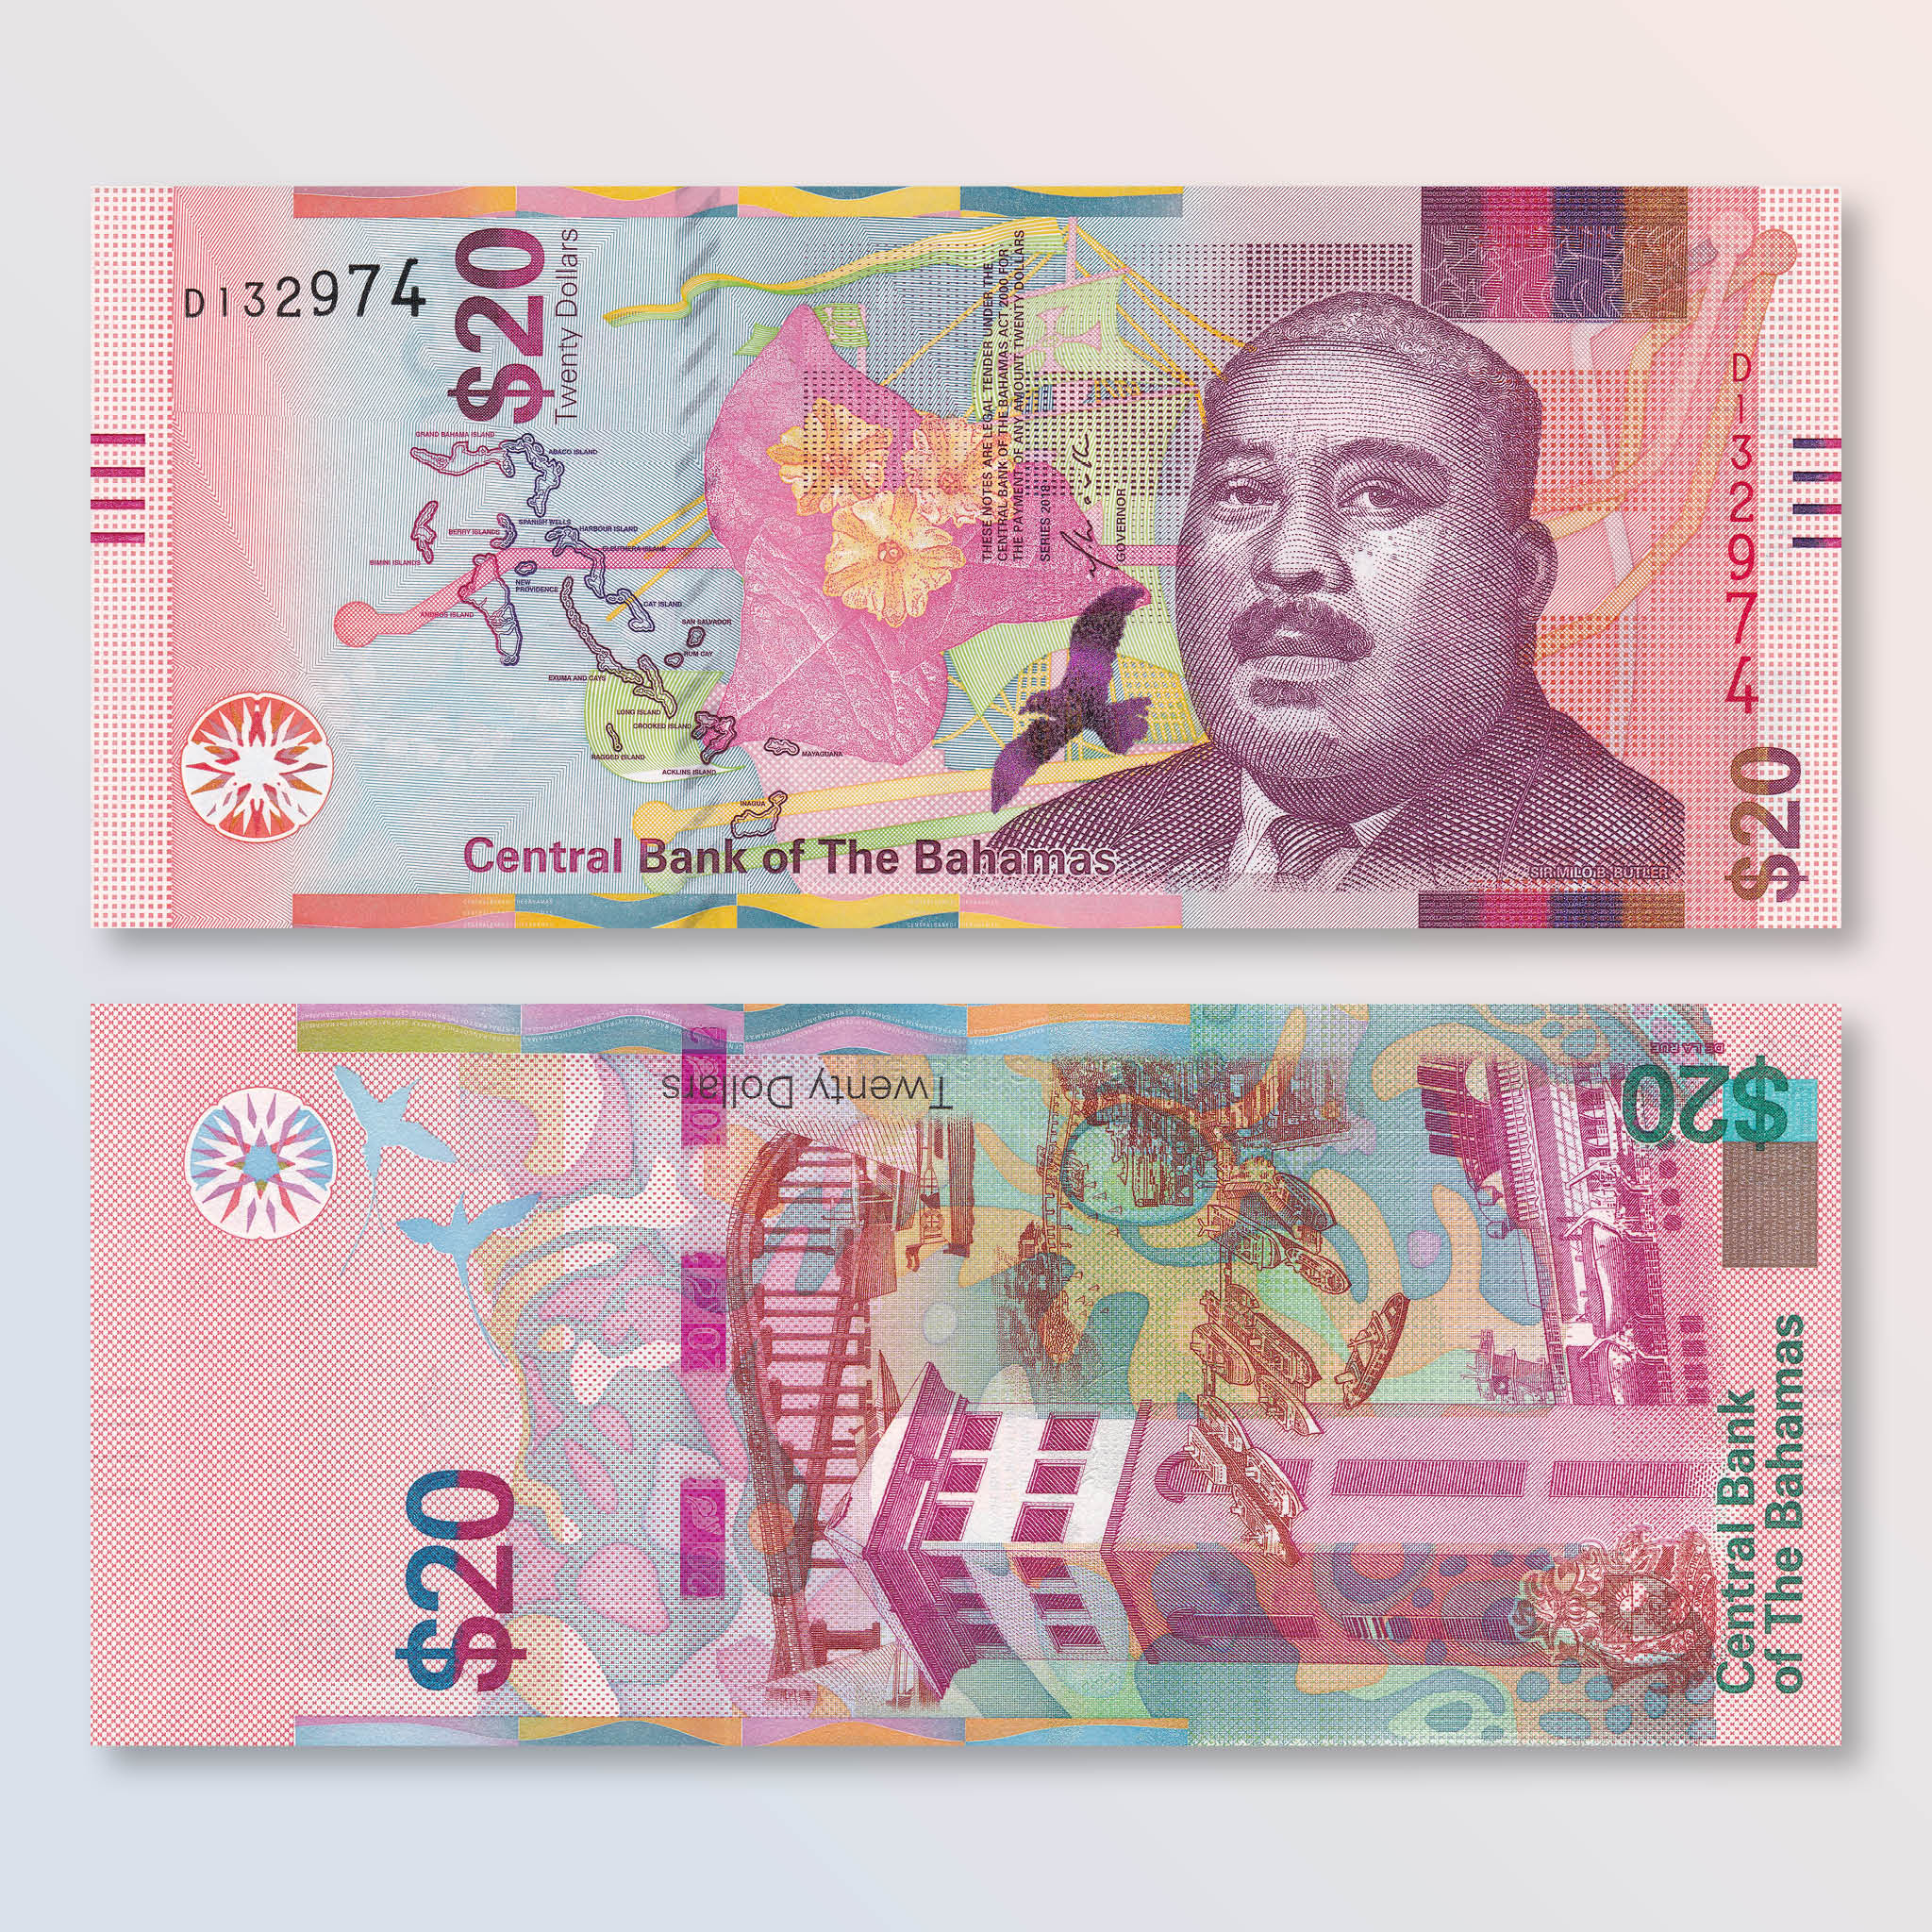 Bahamas 20 Dollars, 2018, B353a, P80, UNC - Robert's World Money - World Banknotes